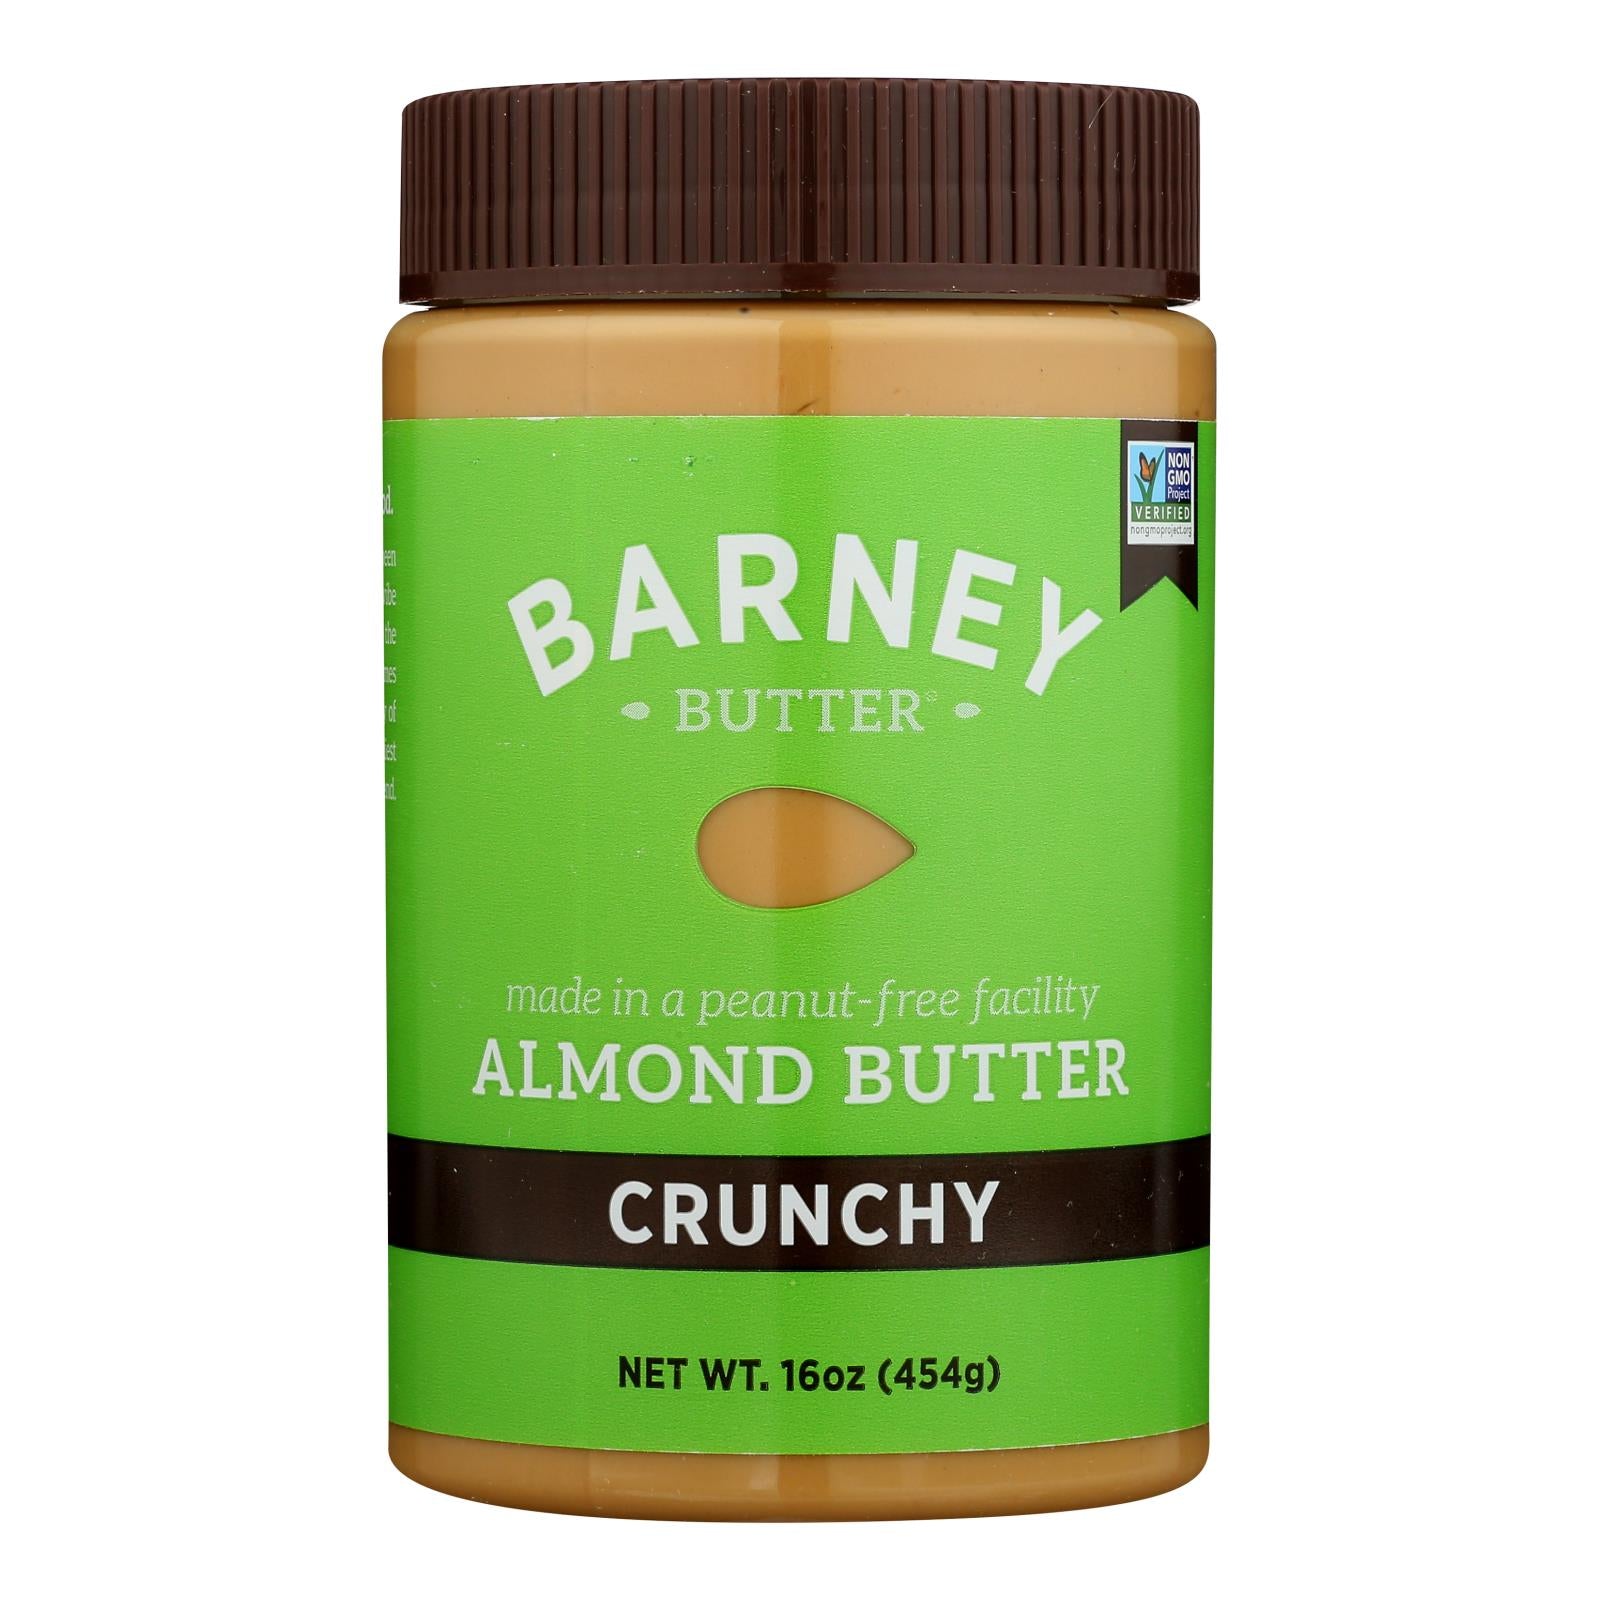 Barney Butter - Almond Butter - Crunchy - Case Of 6 - 16 Oz.